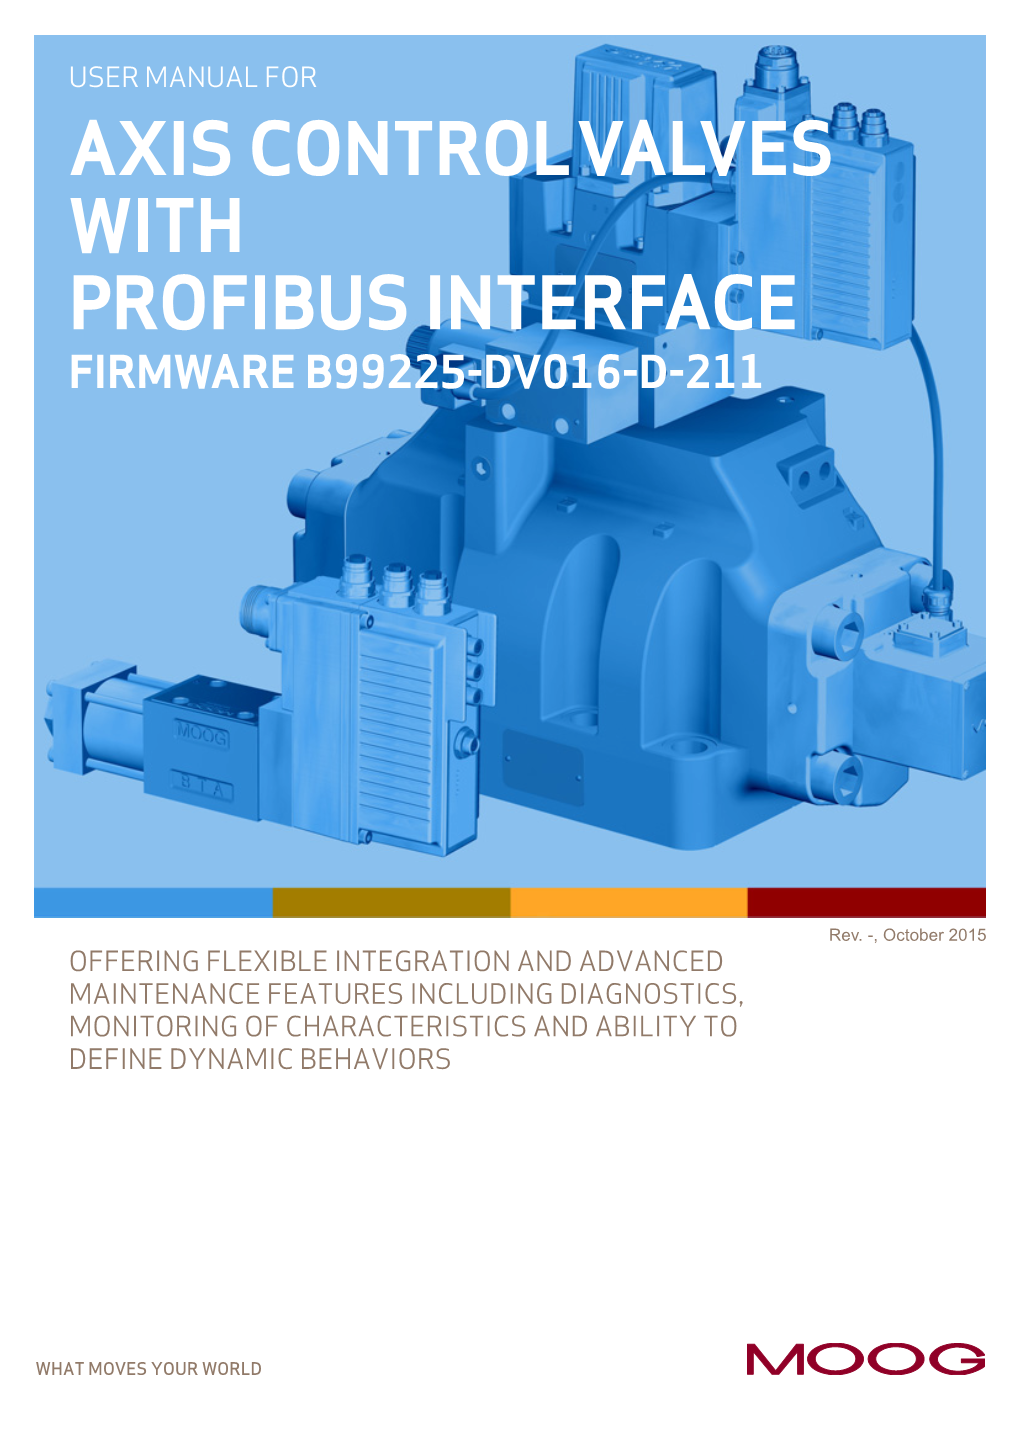 Axis Control Valves PROFIBUS Firmware B99225-DV016-D-211